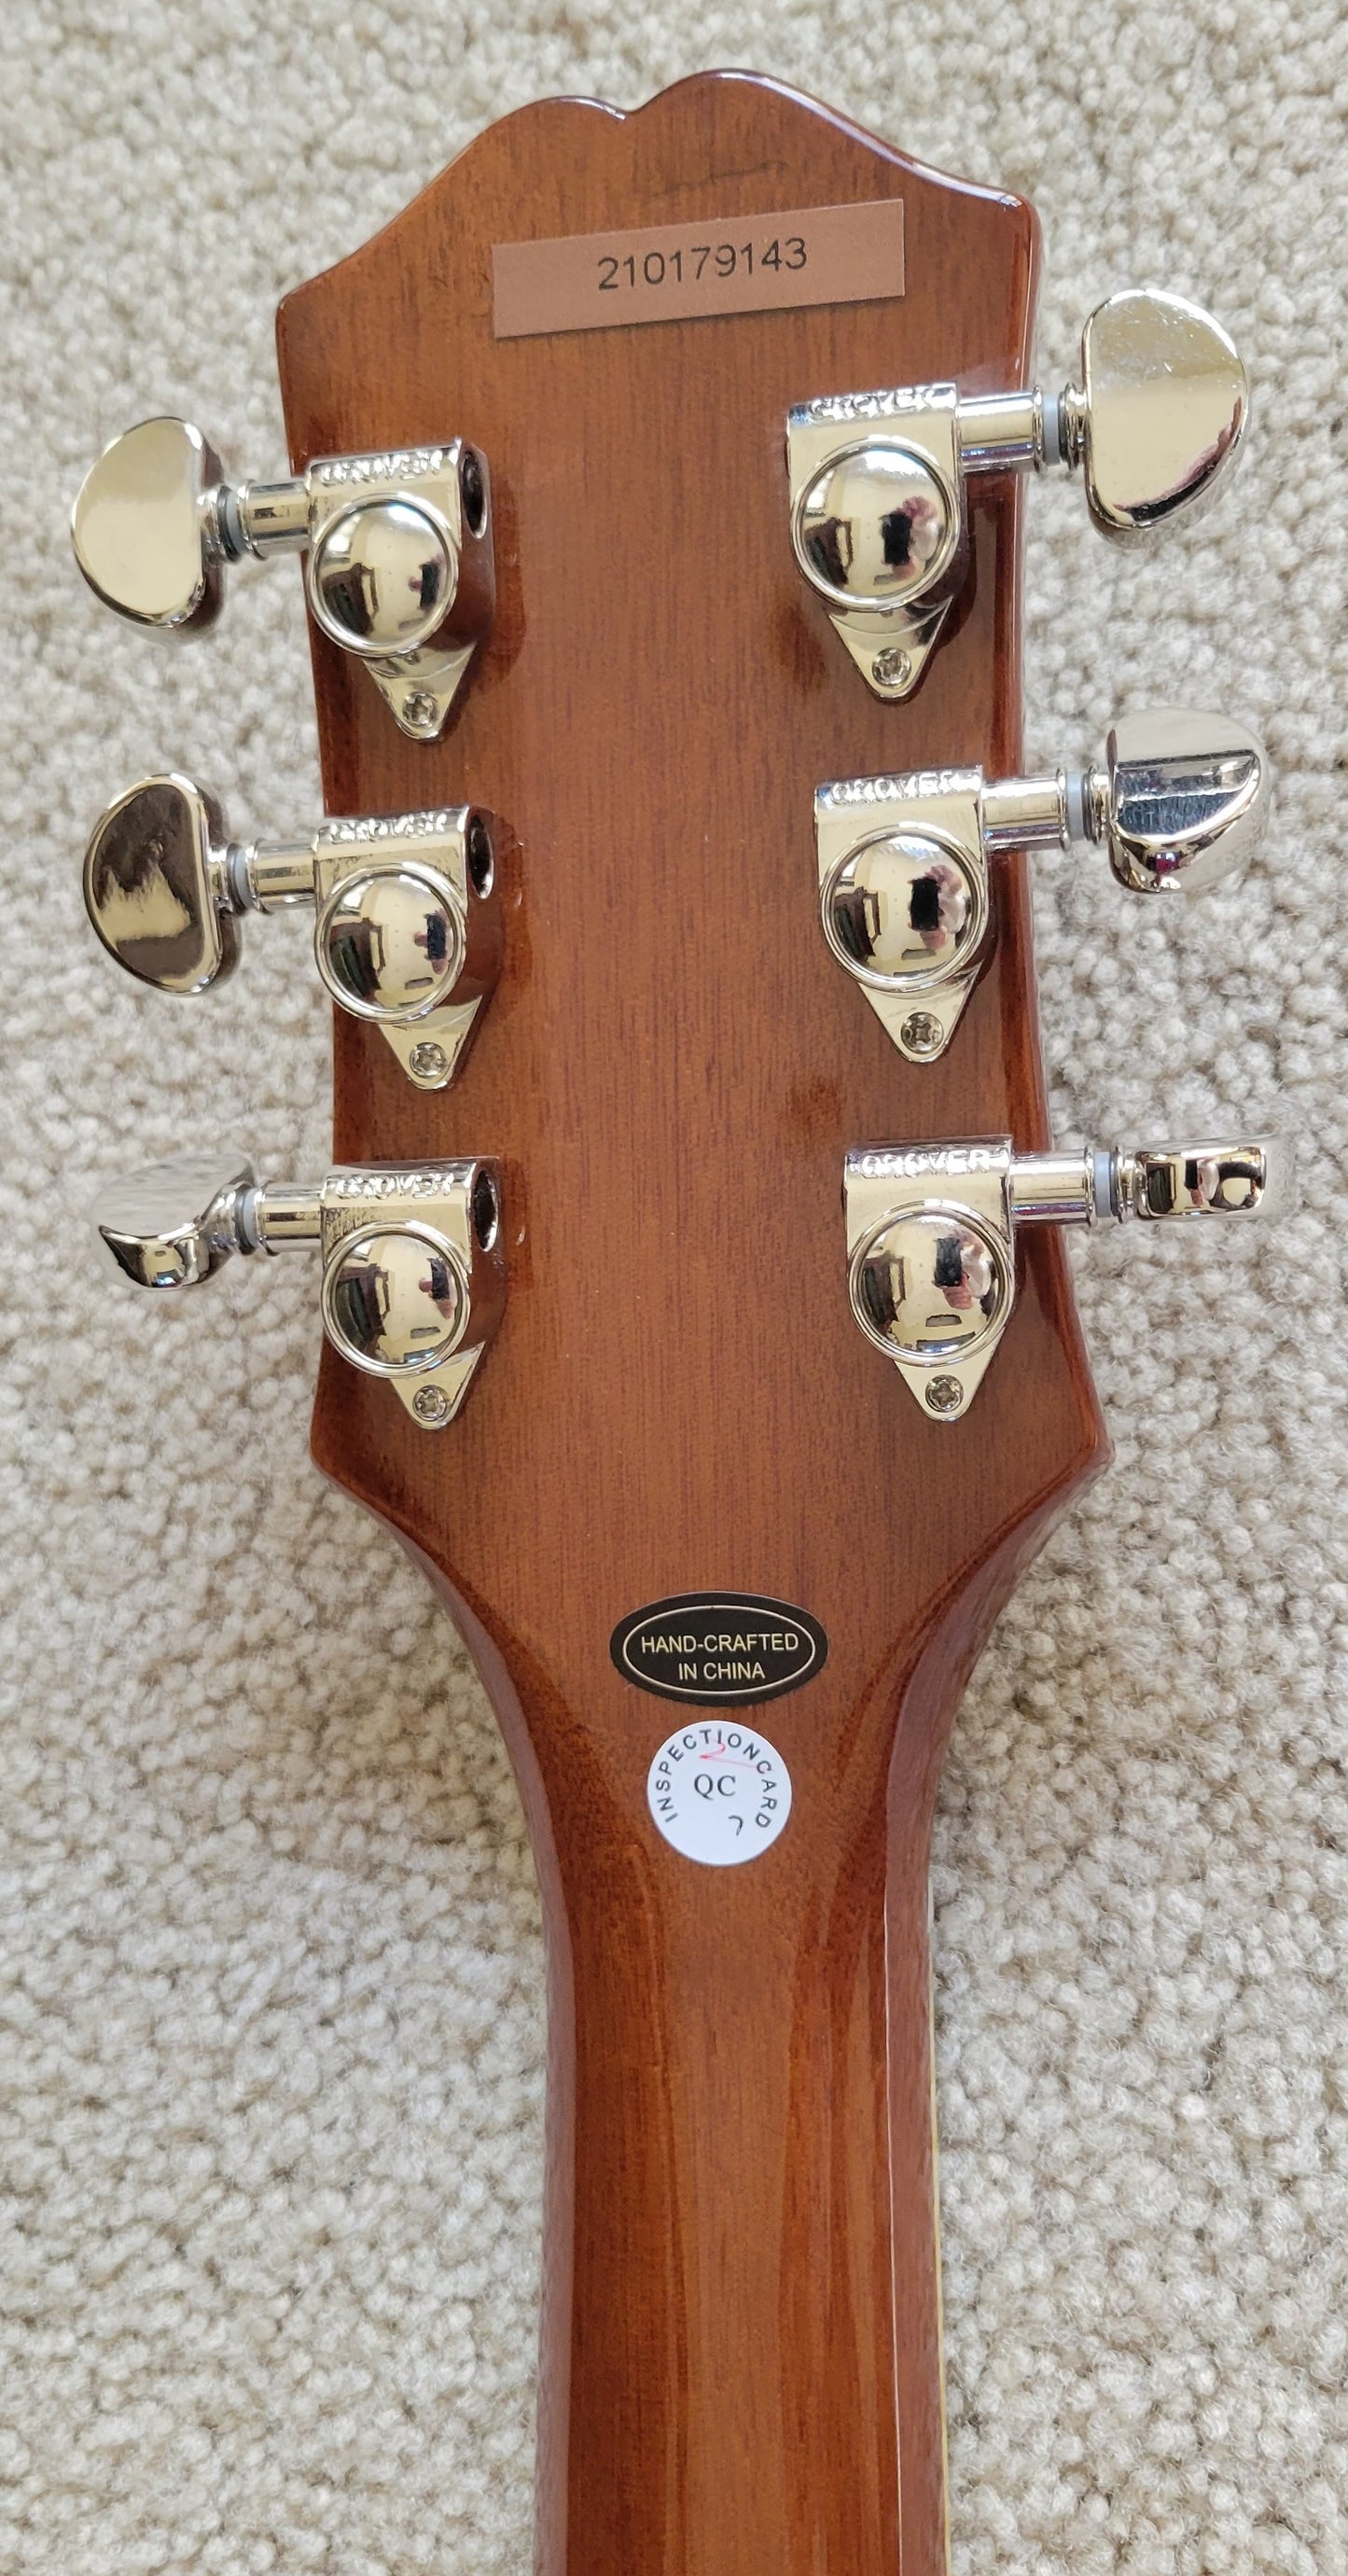 Epiphone Les Paul Classic MOD Honeyburst Electric Guitar, Epiphone Hard Shell Case